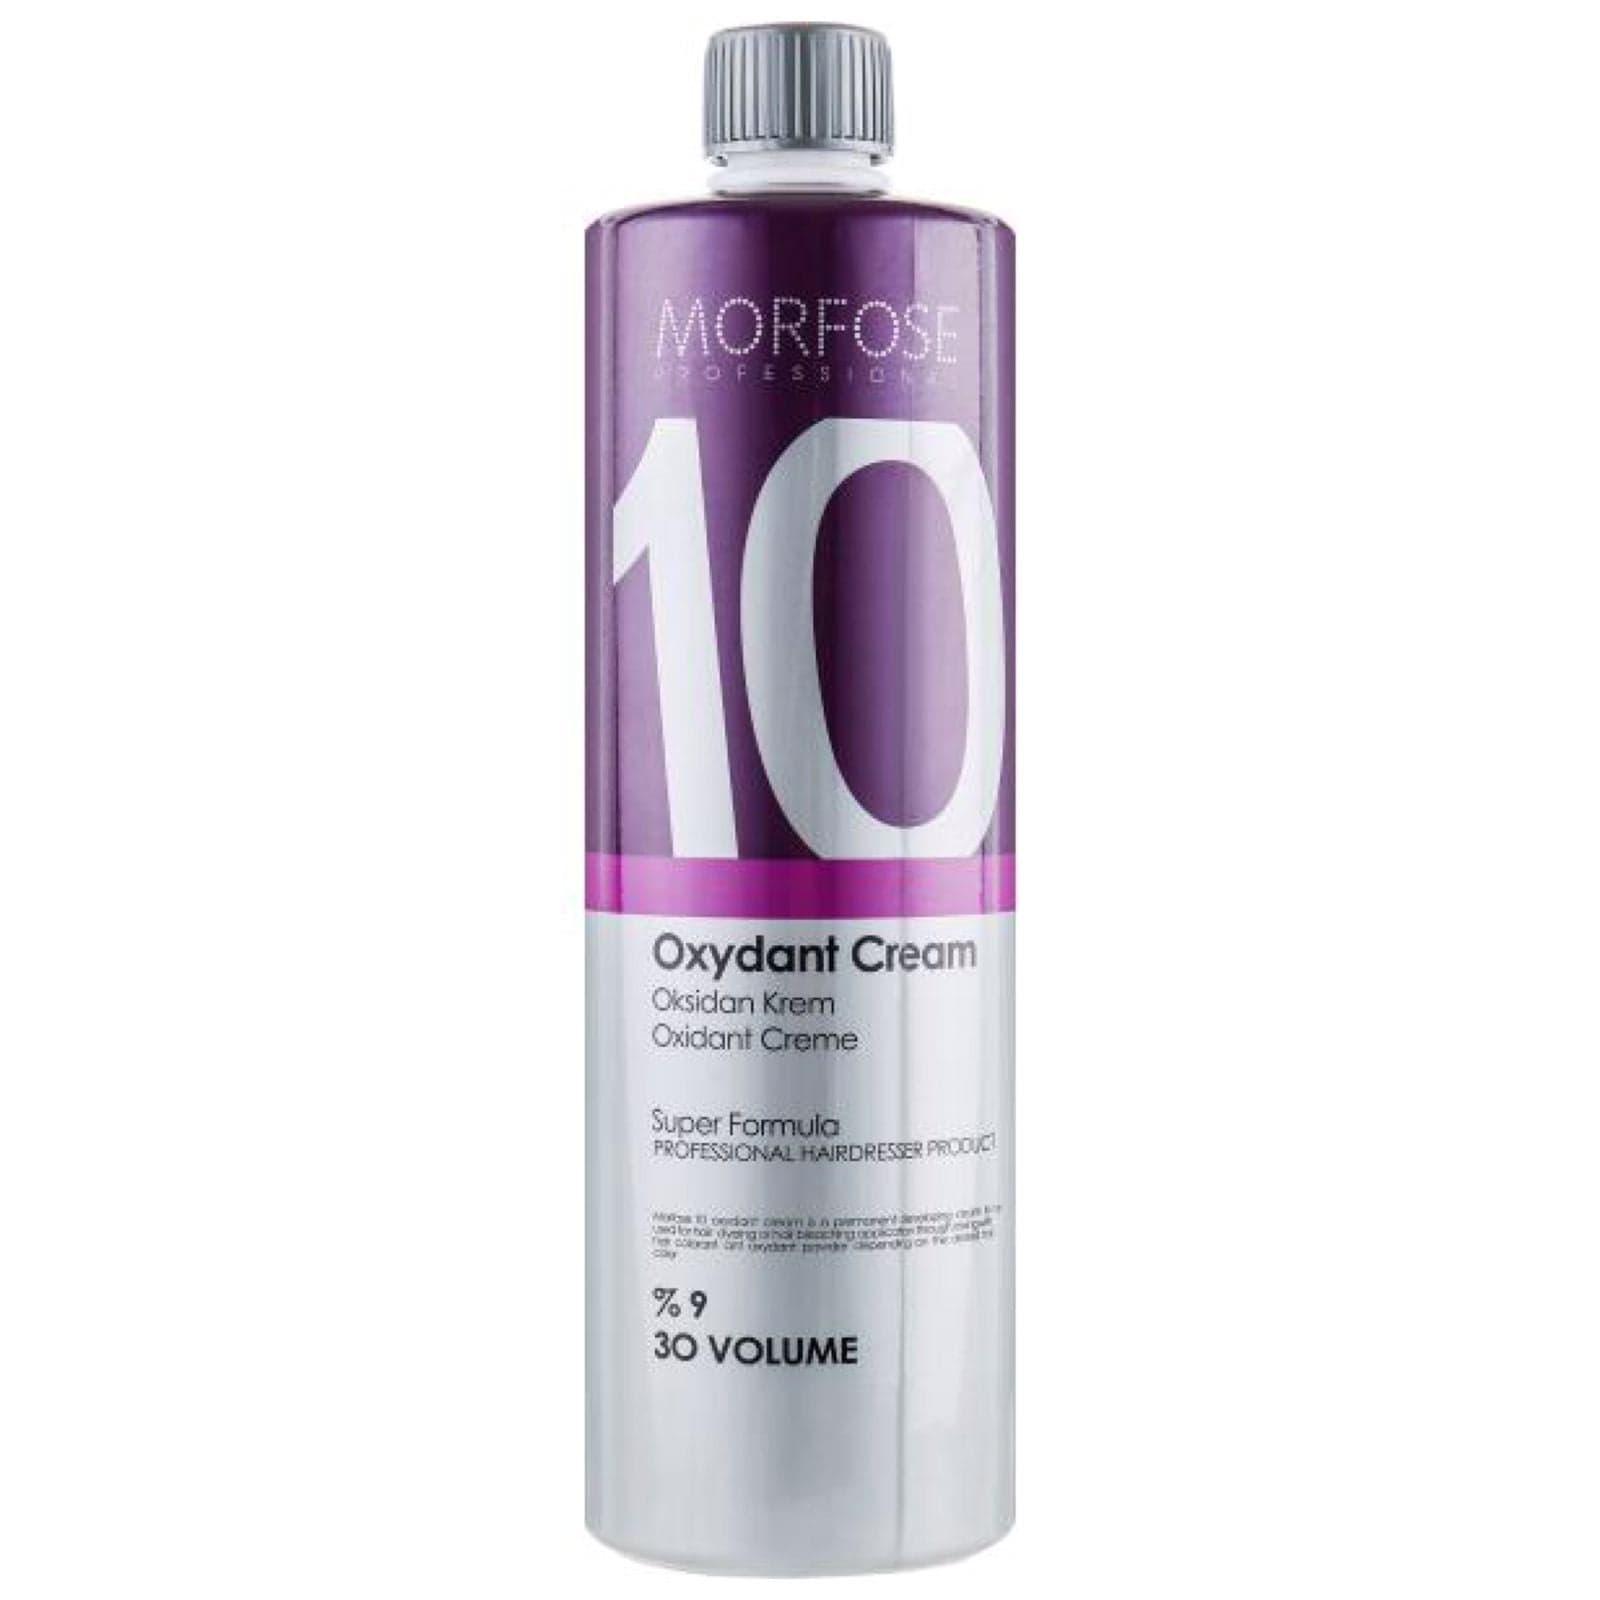 Morfose 10 Oxidant Cream 9% 30 Volume 1000ml